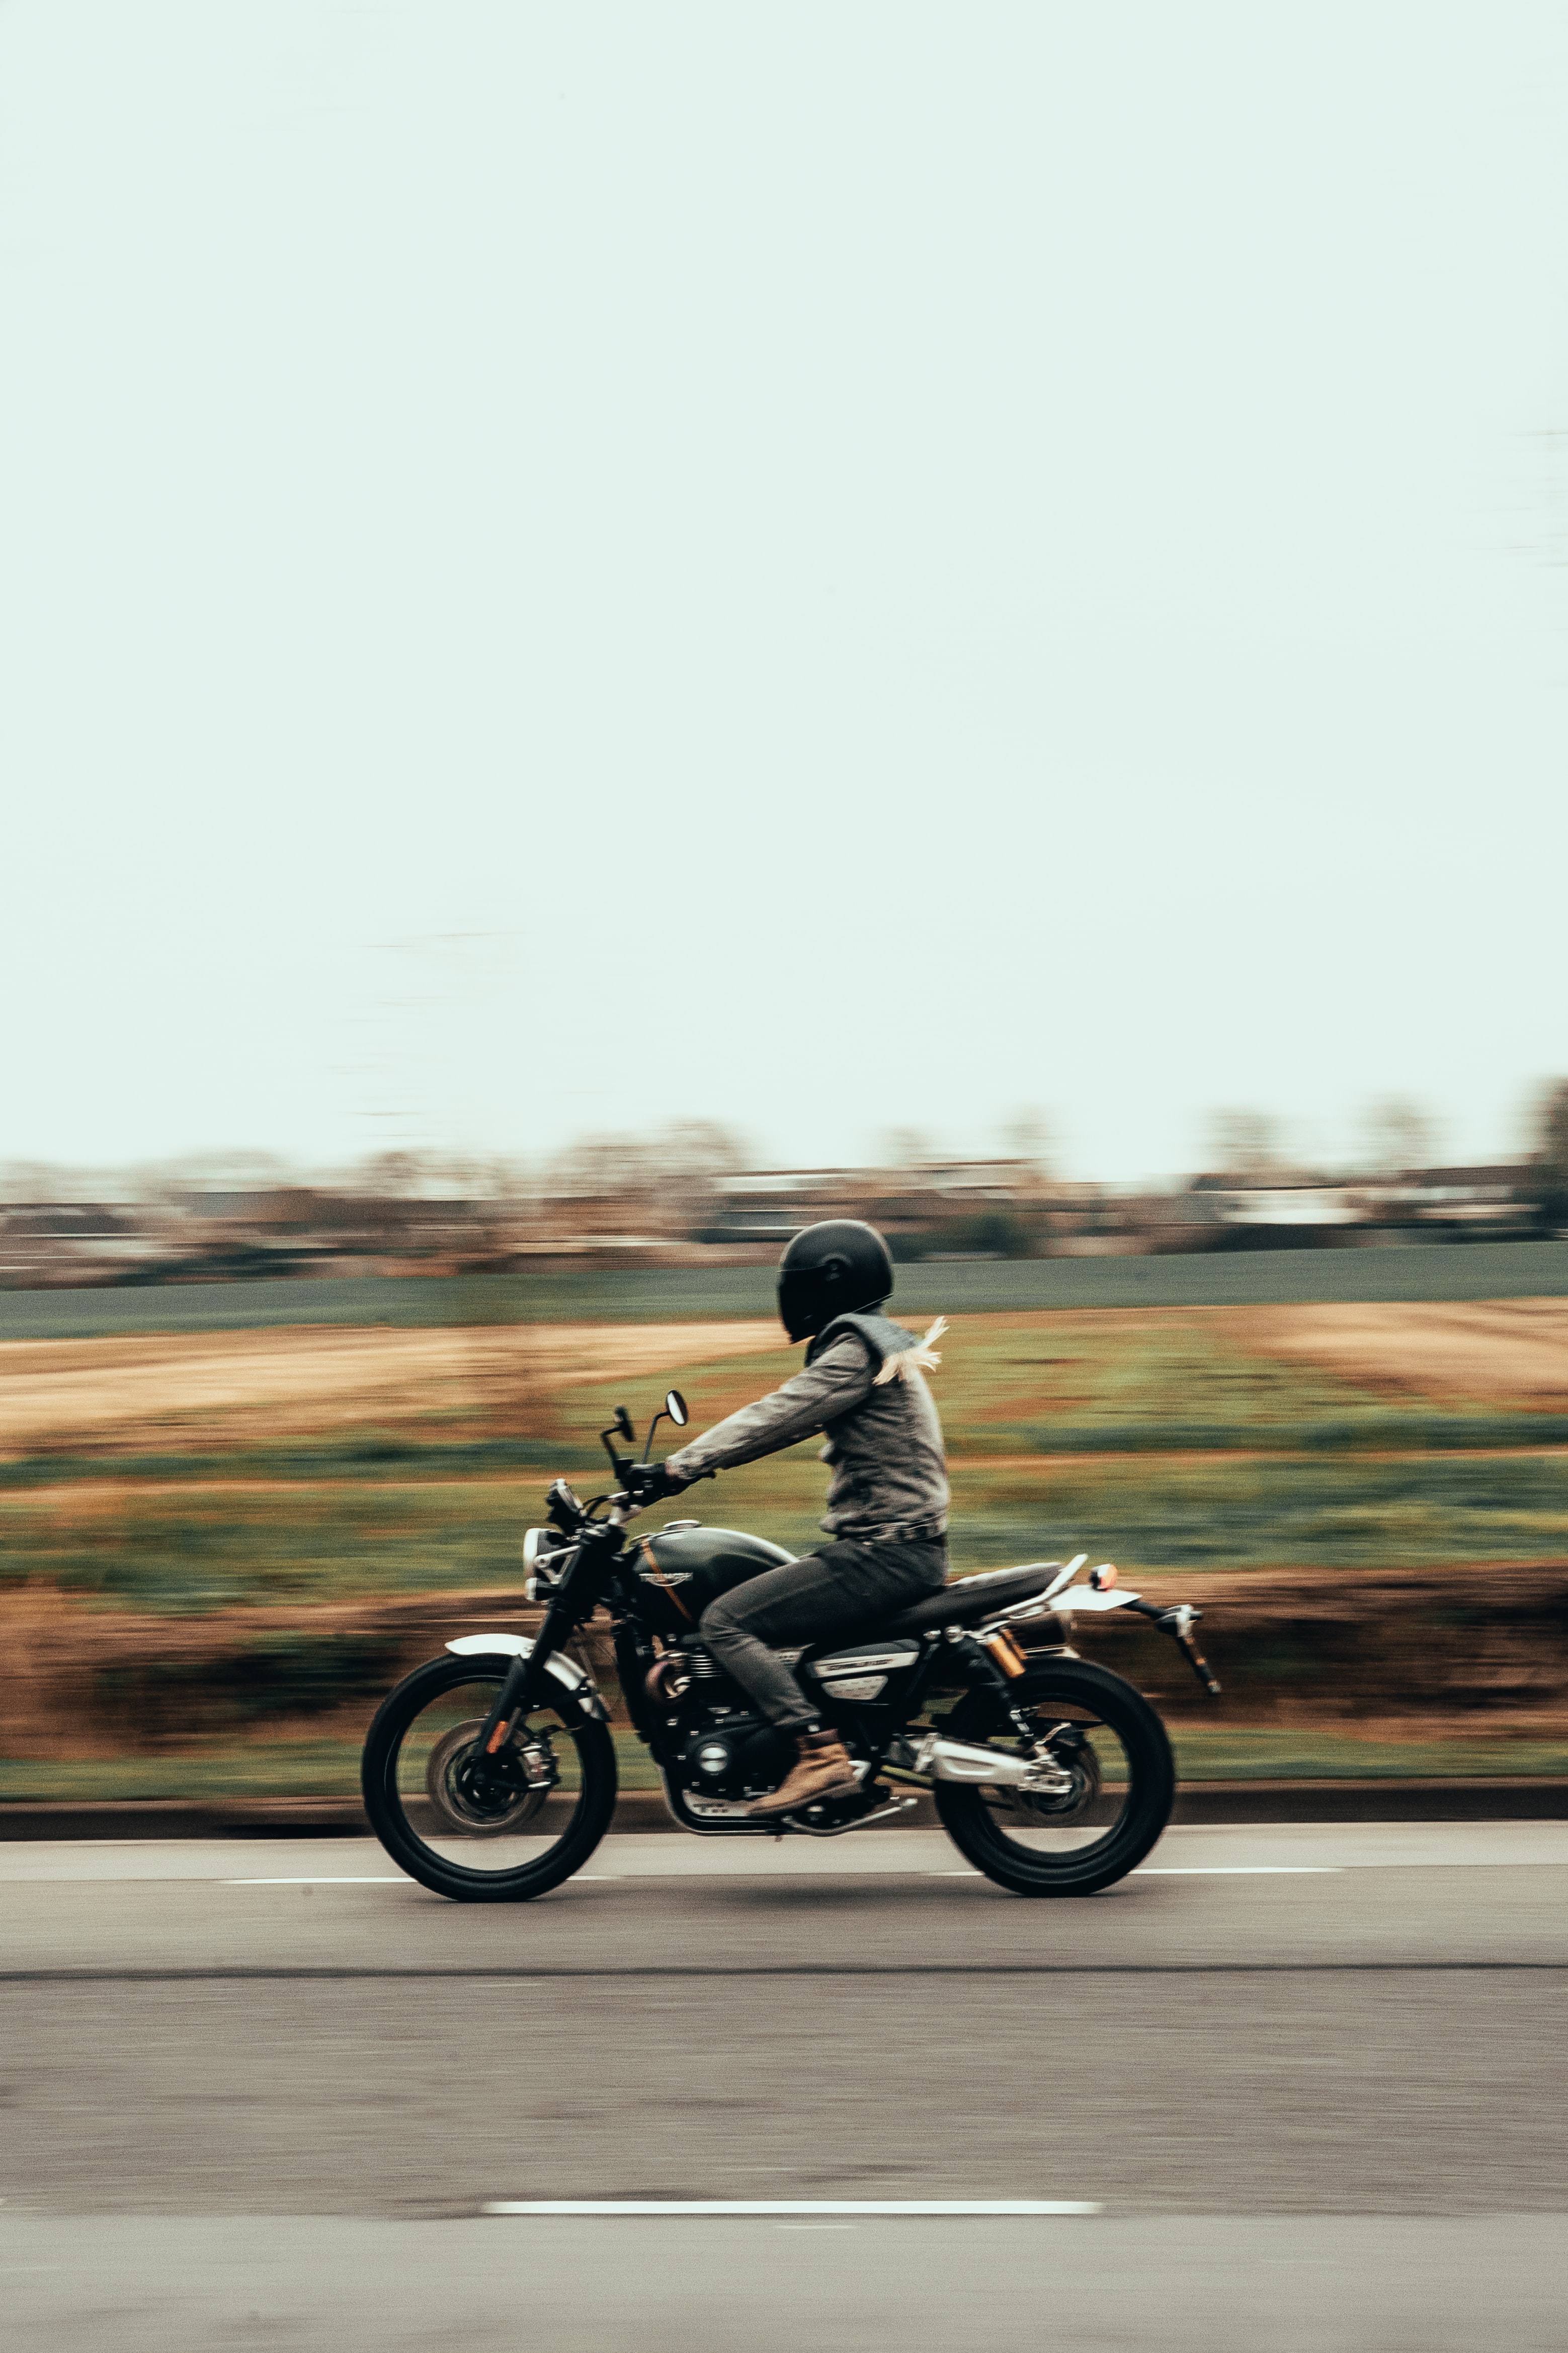 helmet, motorcycles, traffic, movement, motorcycle cellphone